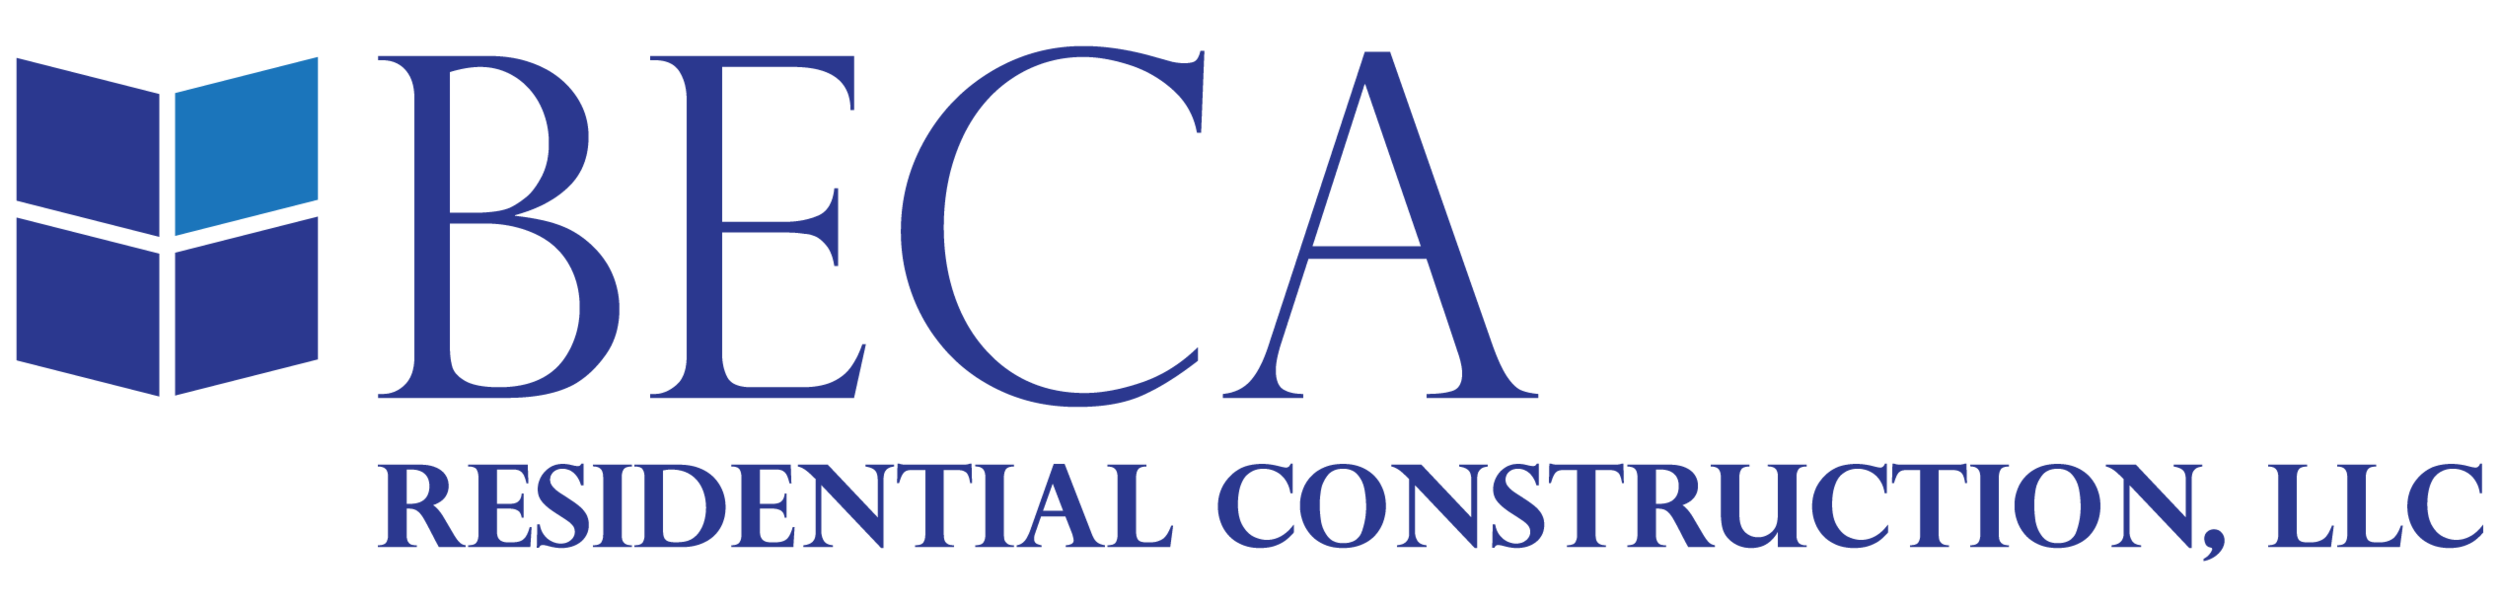 BECA Residential Construction, LLC